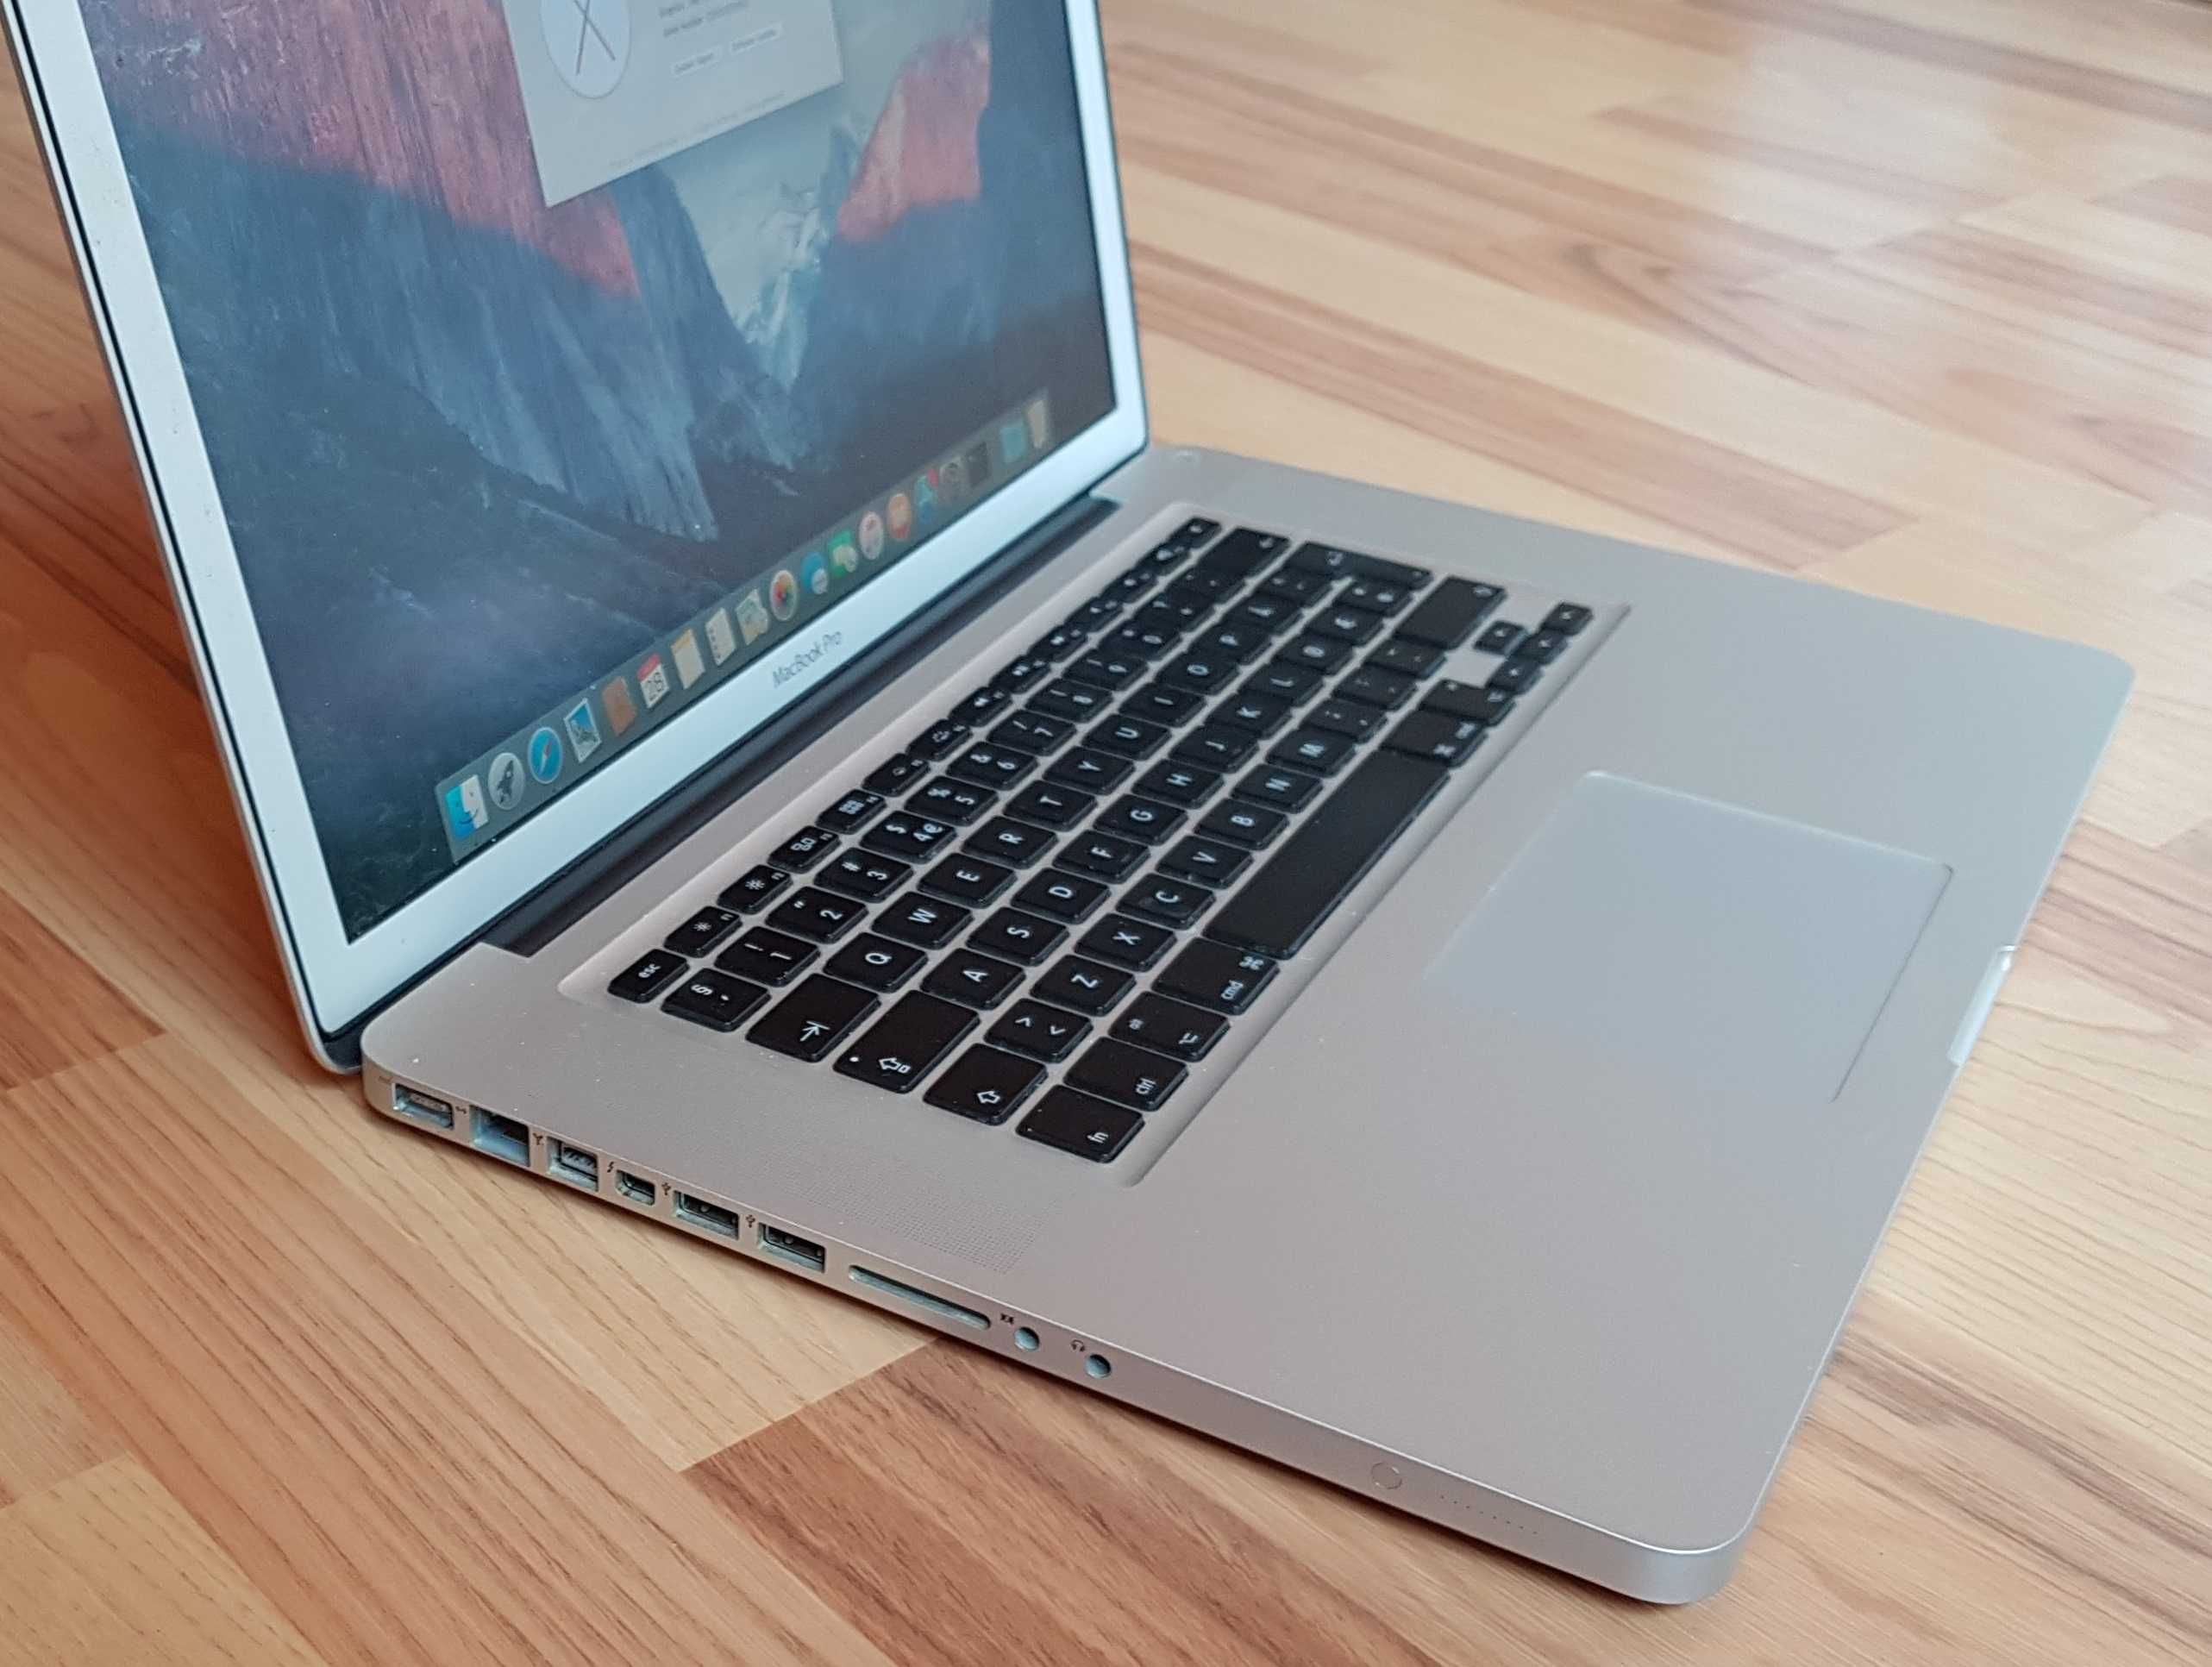 Laptop Apple Macbook Pro 15", Intel Core i7, 8 GB Ram, HDD 750 GB